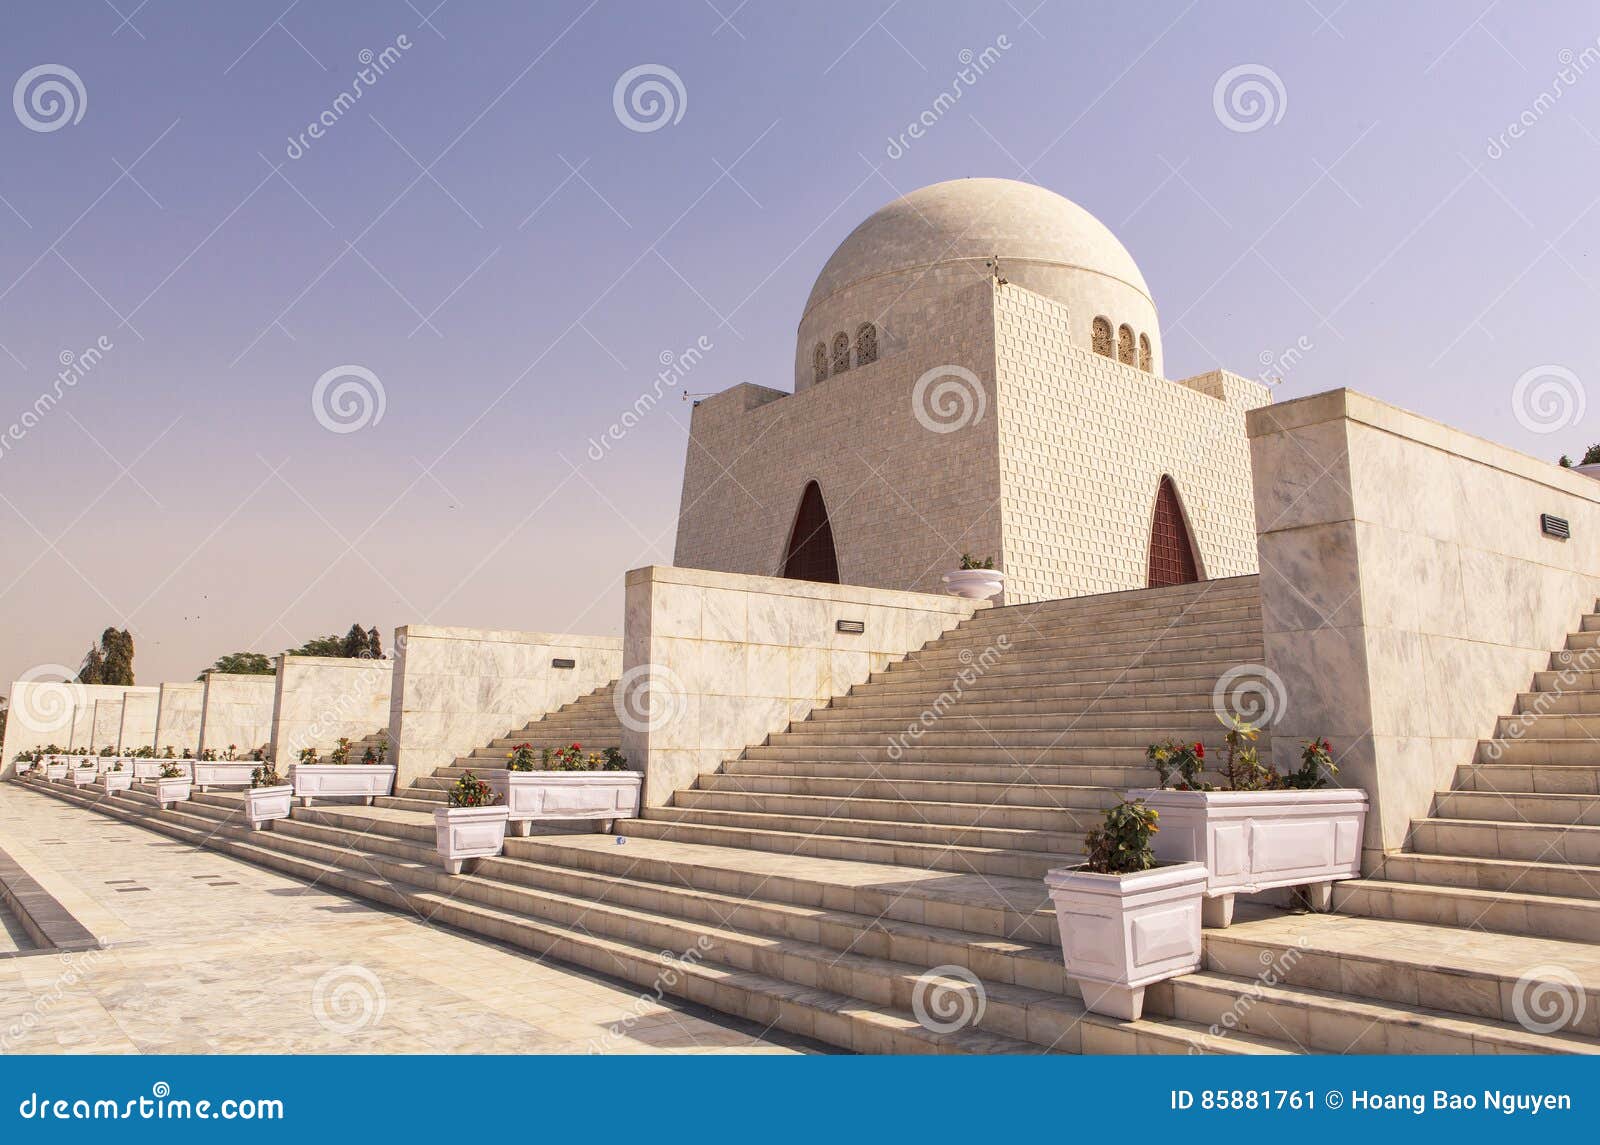 jinnah mausoleum in karachi, pakistan